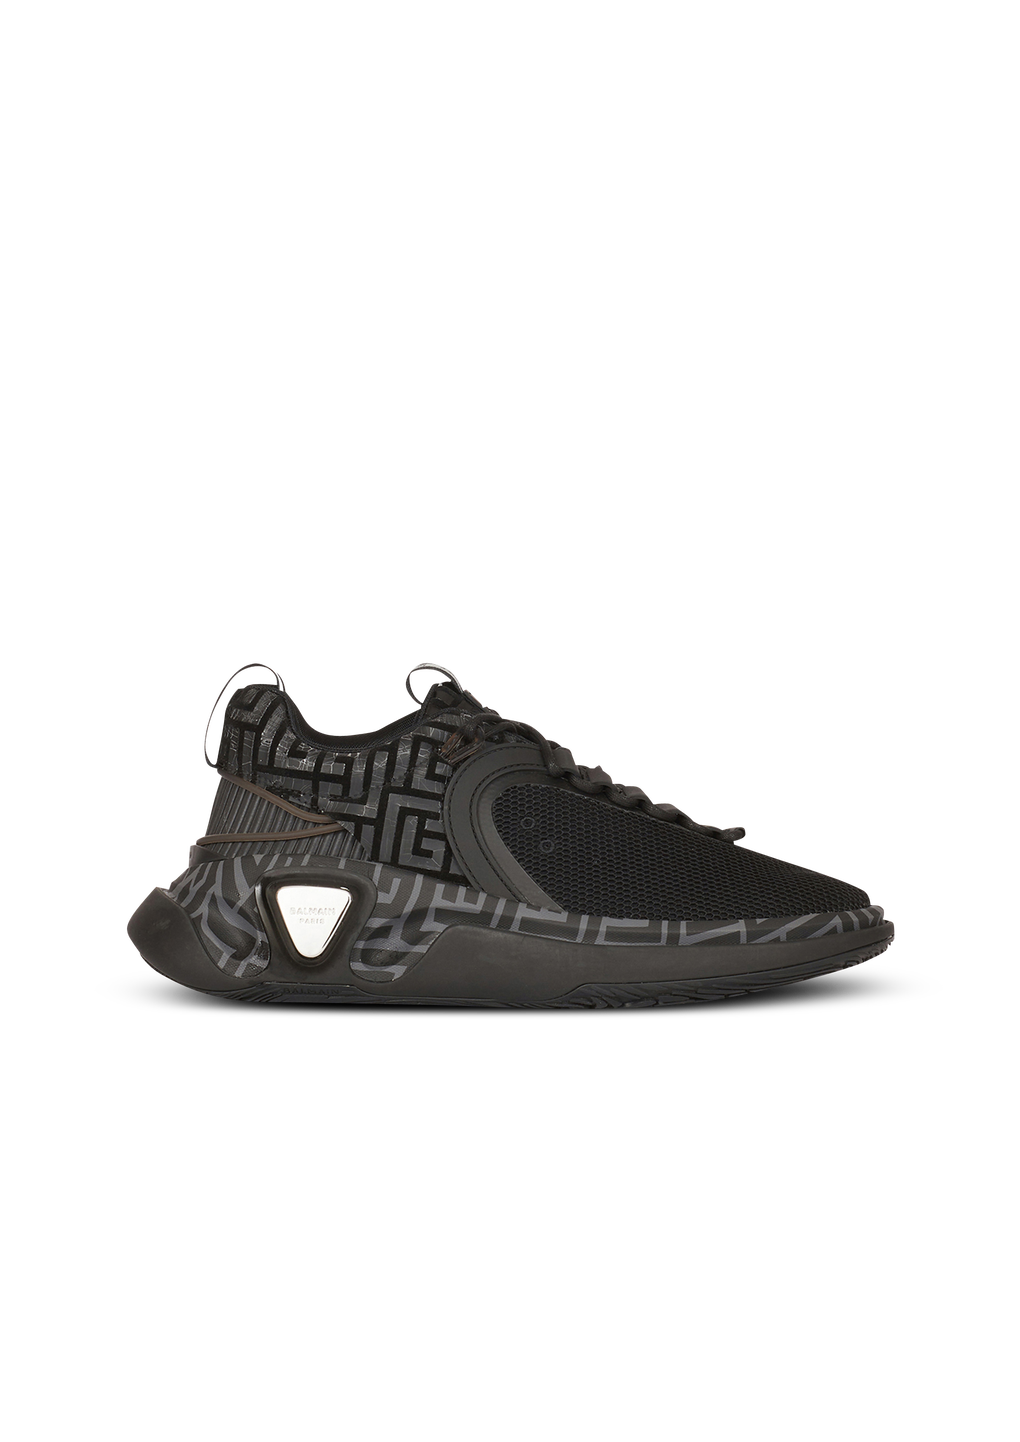 Monogram suede and mesh B-Runner sneakers, black, hi-res